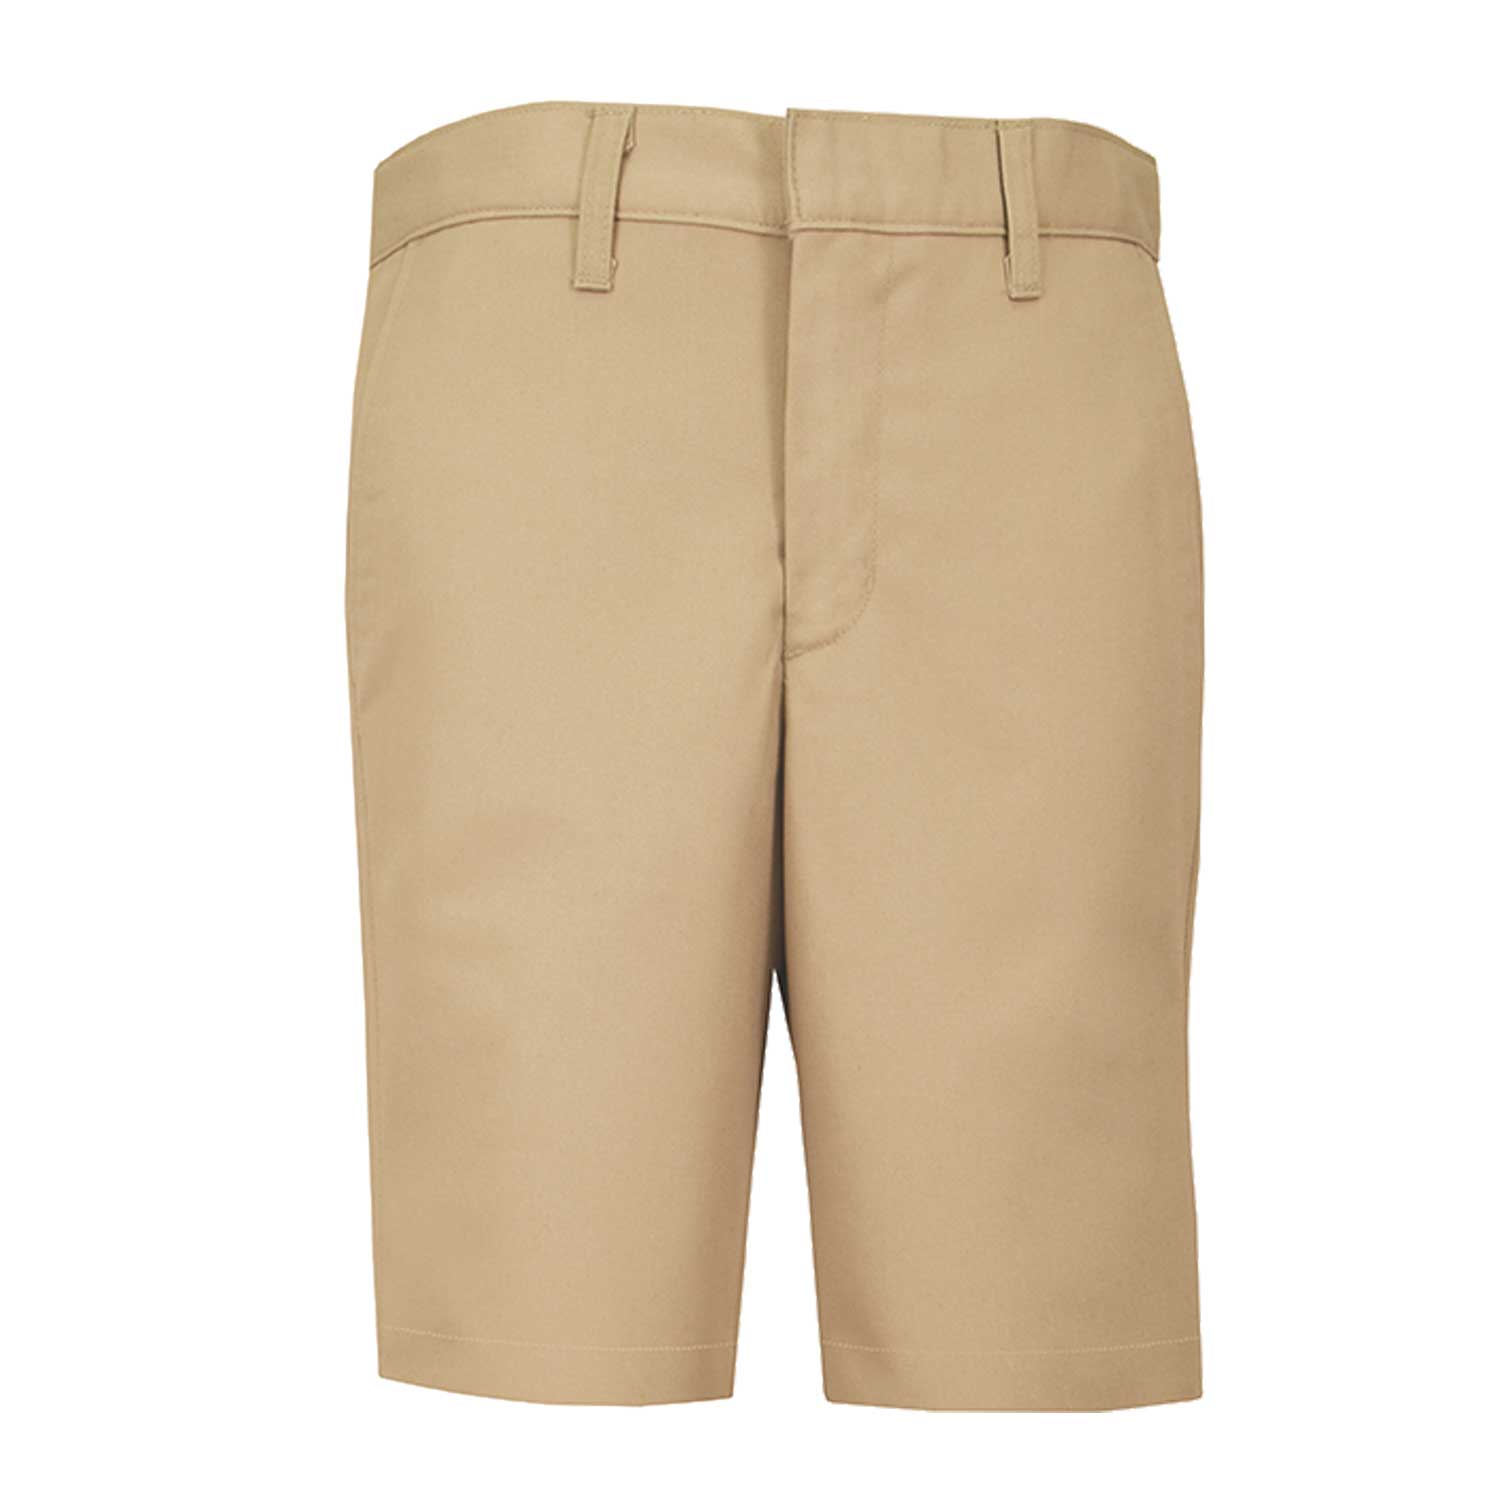 1328-Boy's Husky Dri-fit Shorts